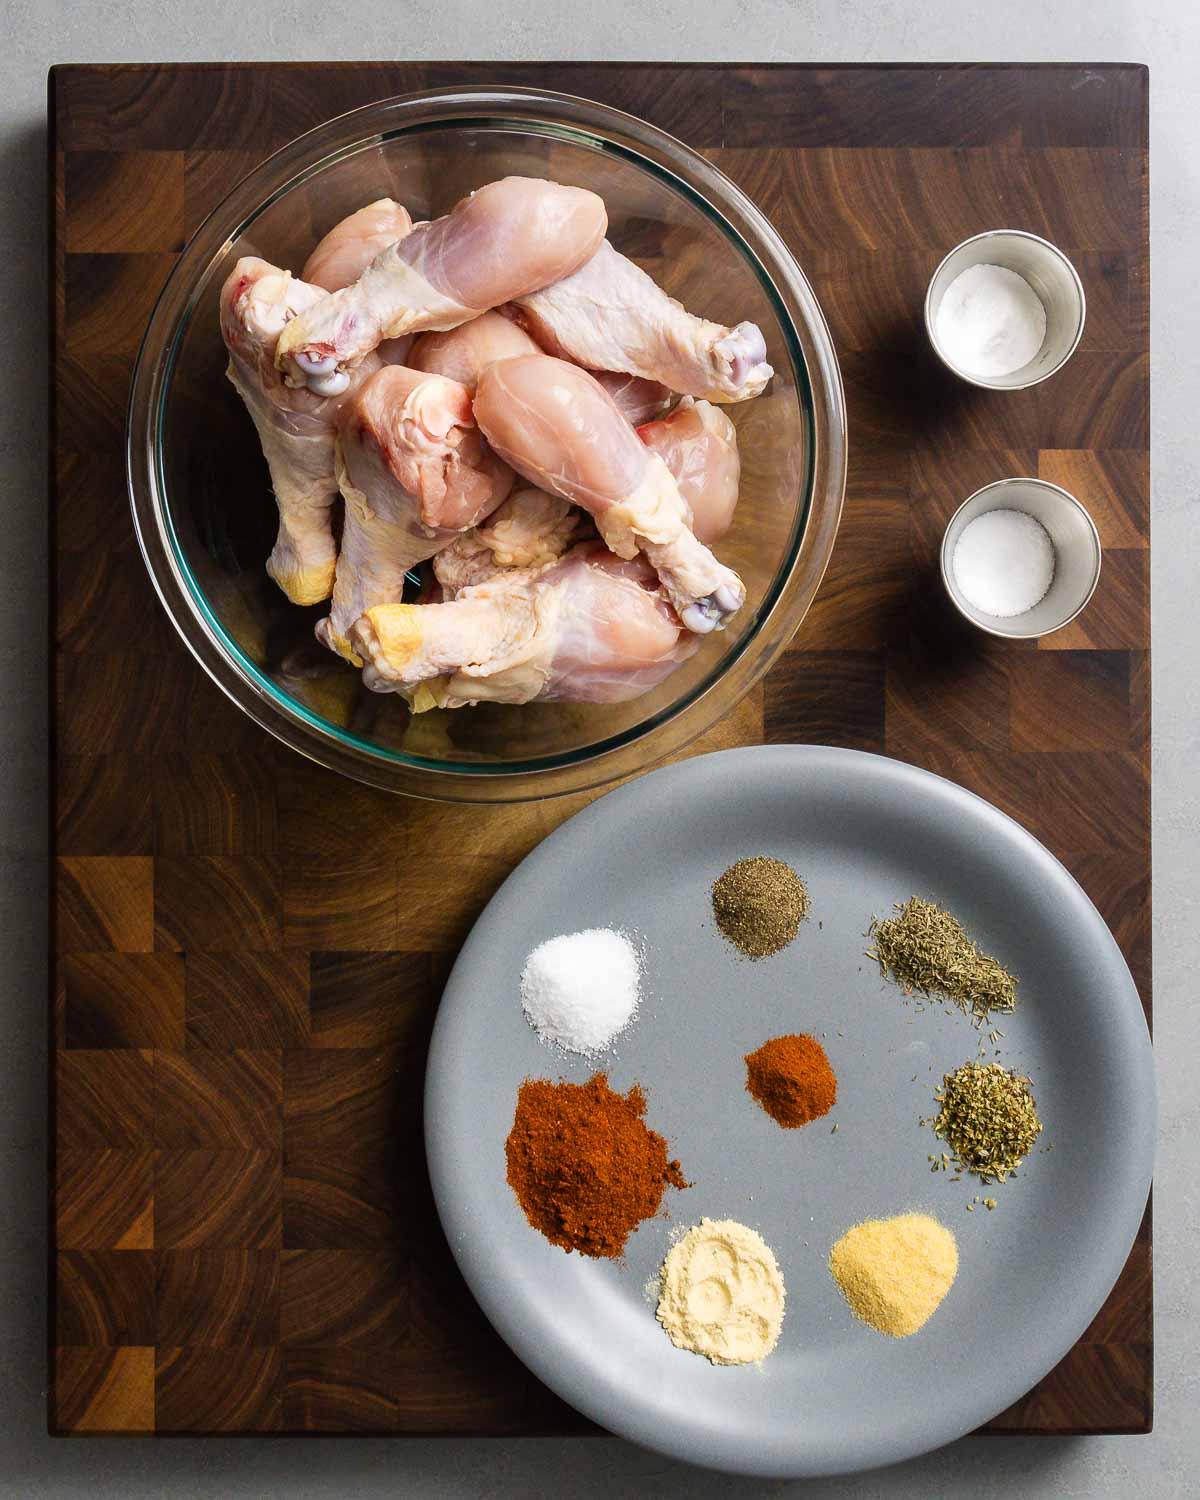 Ingredients shown: bowl of chicken legs, baking powder, salt, and spices for Cajun seasoning.